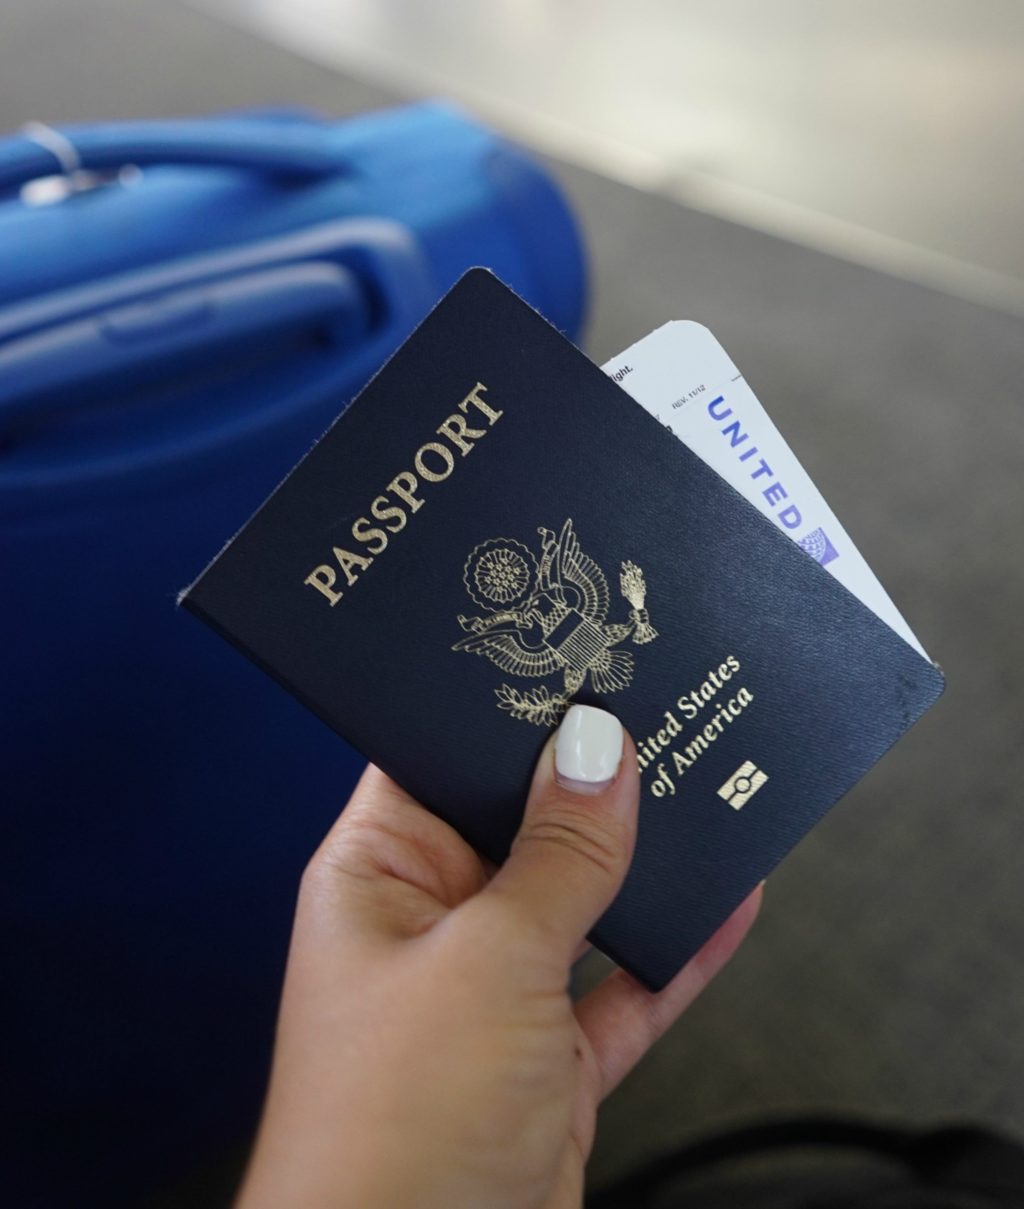 passport travel image